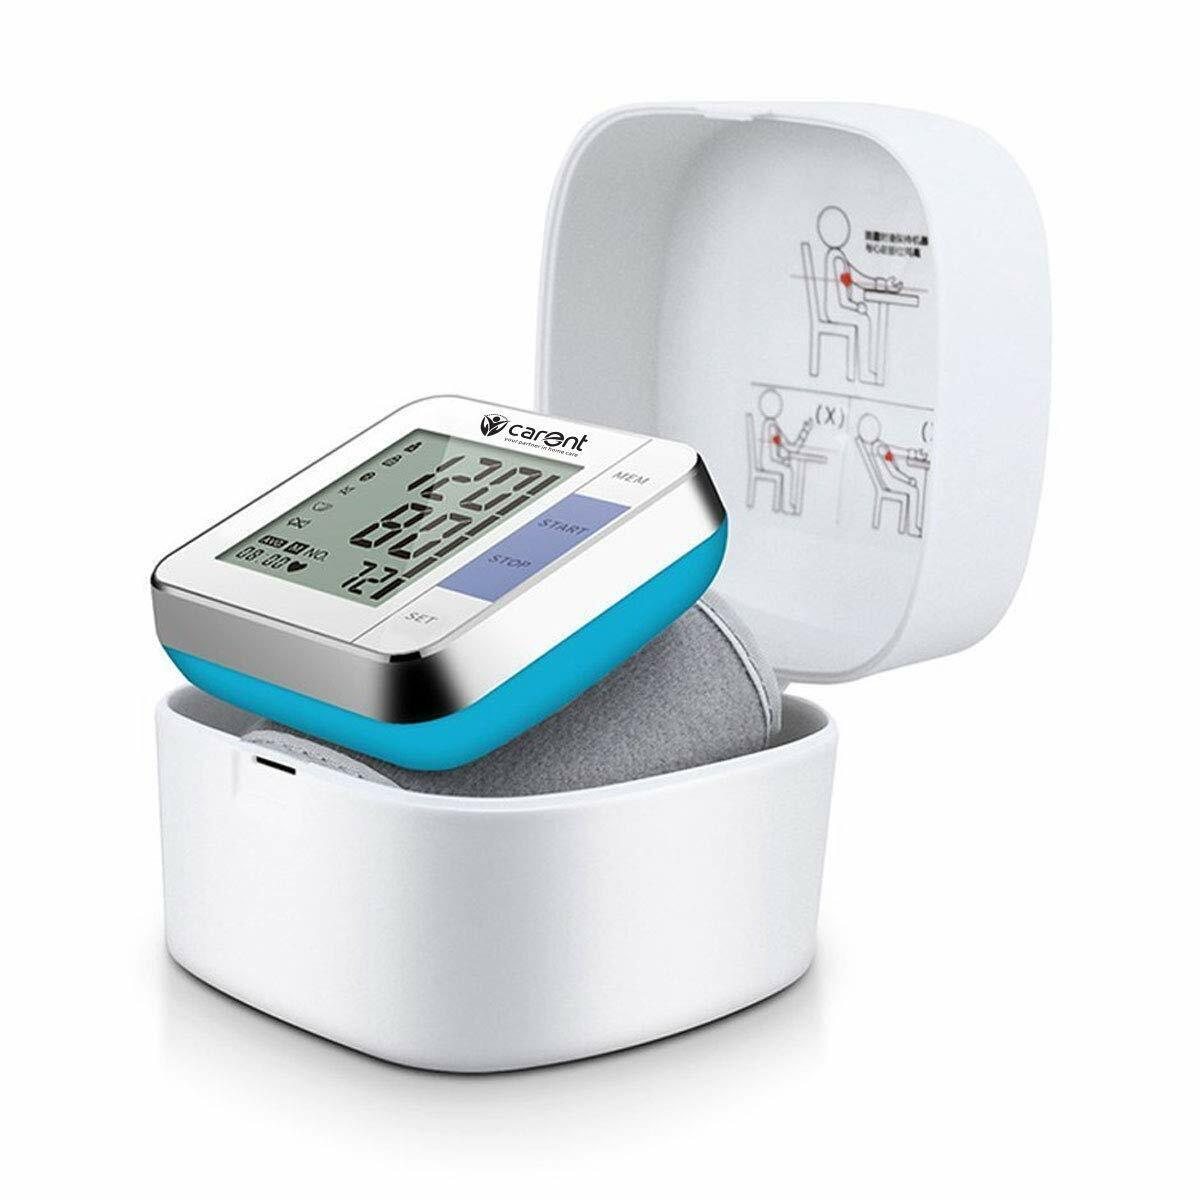 Carent W02 Automactic Wrist Blood Pressure Monitor (W-02) - Certyfikat Ce